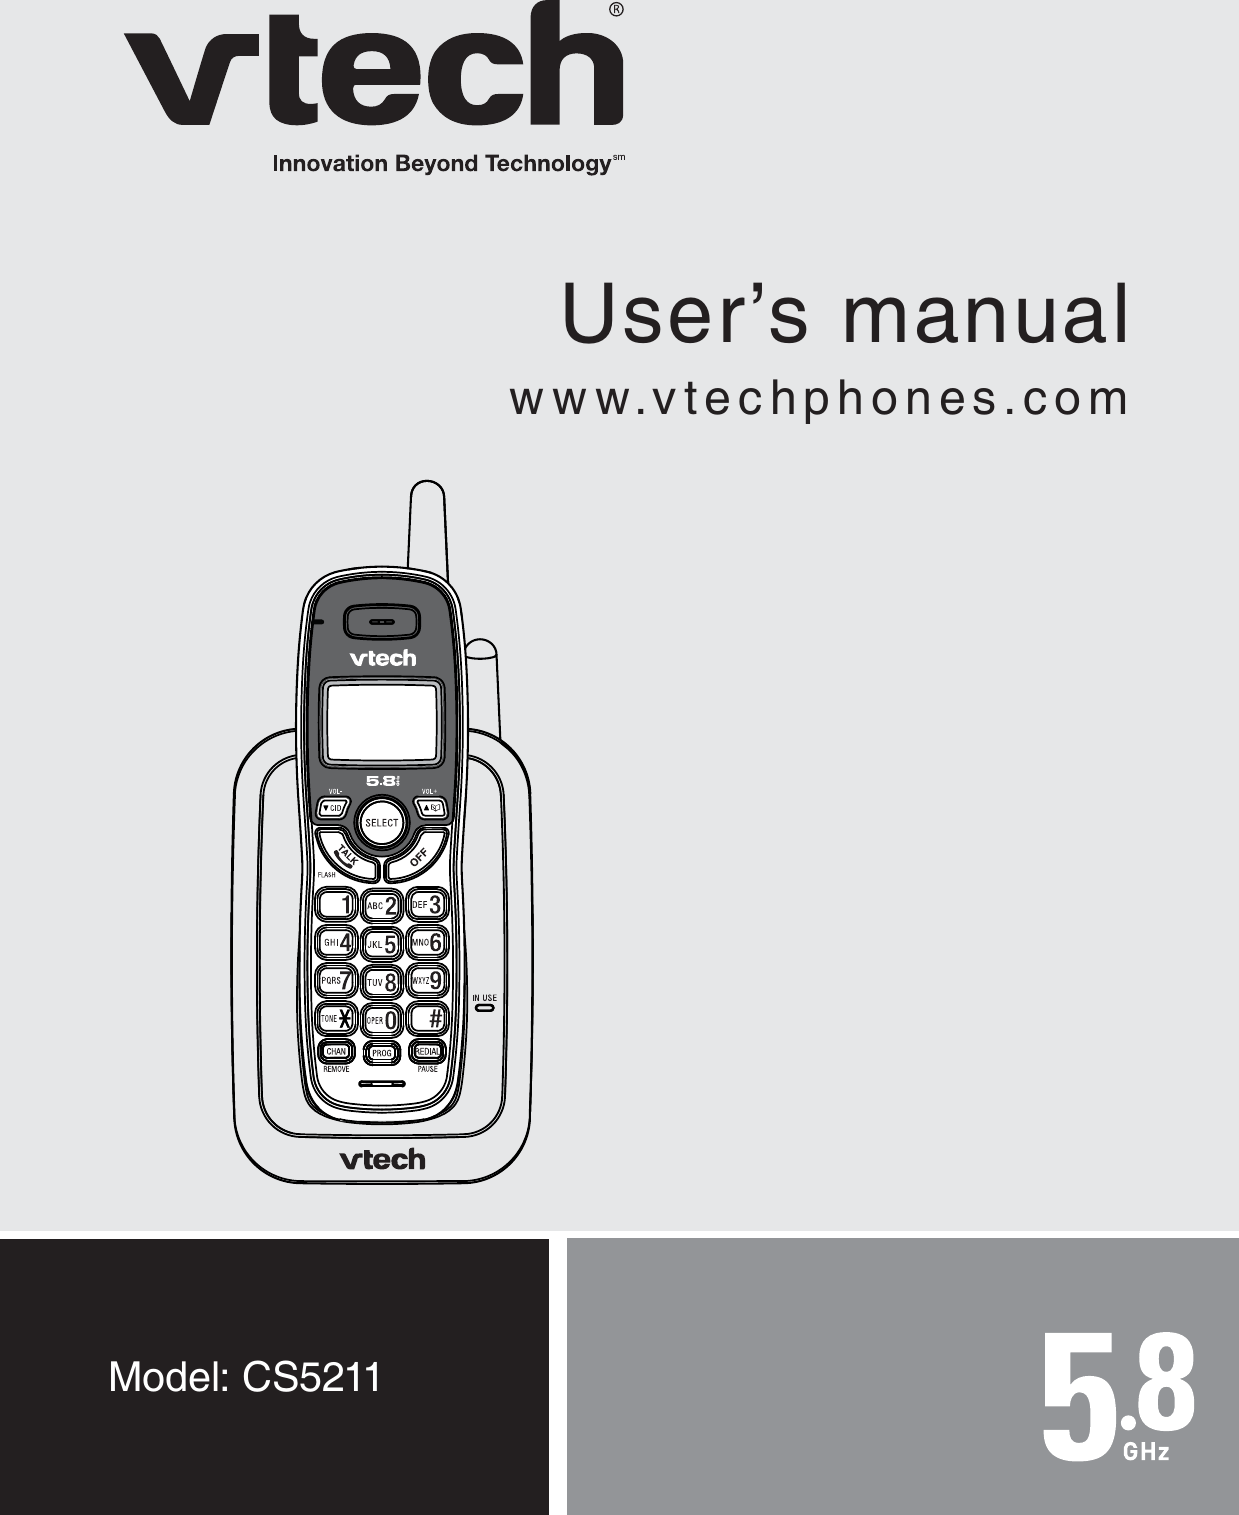 User’s manualwww.vtechphones.comModel: CS5211